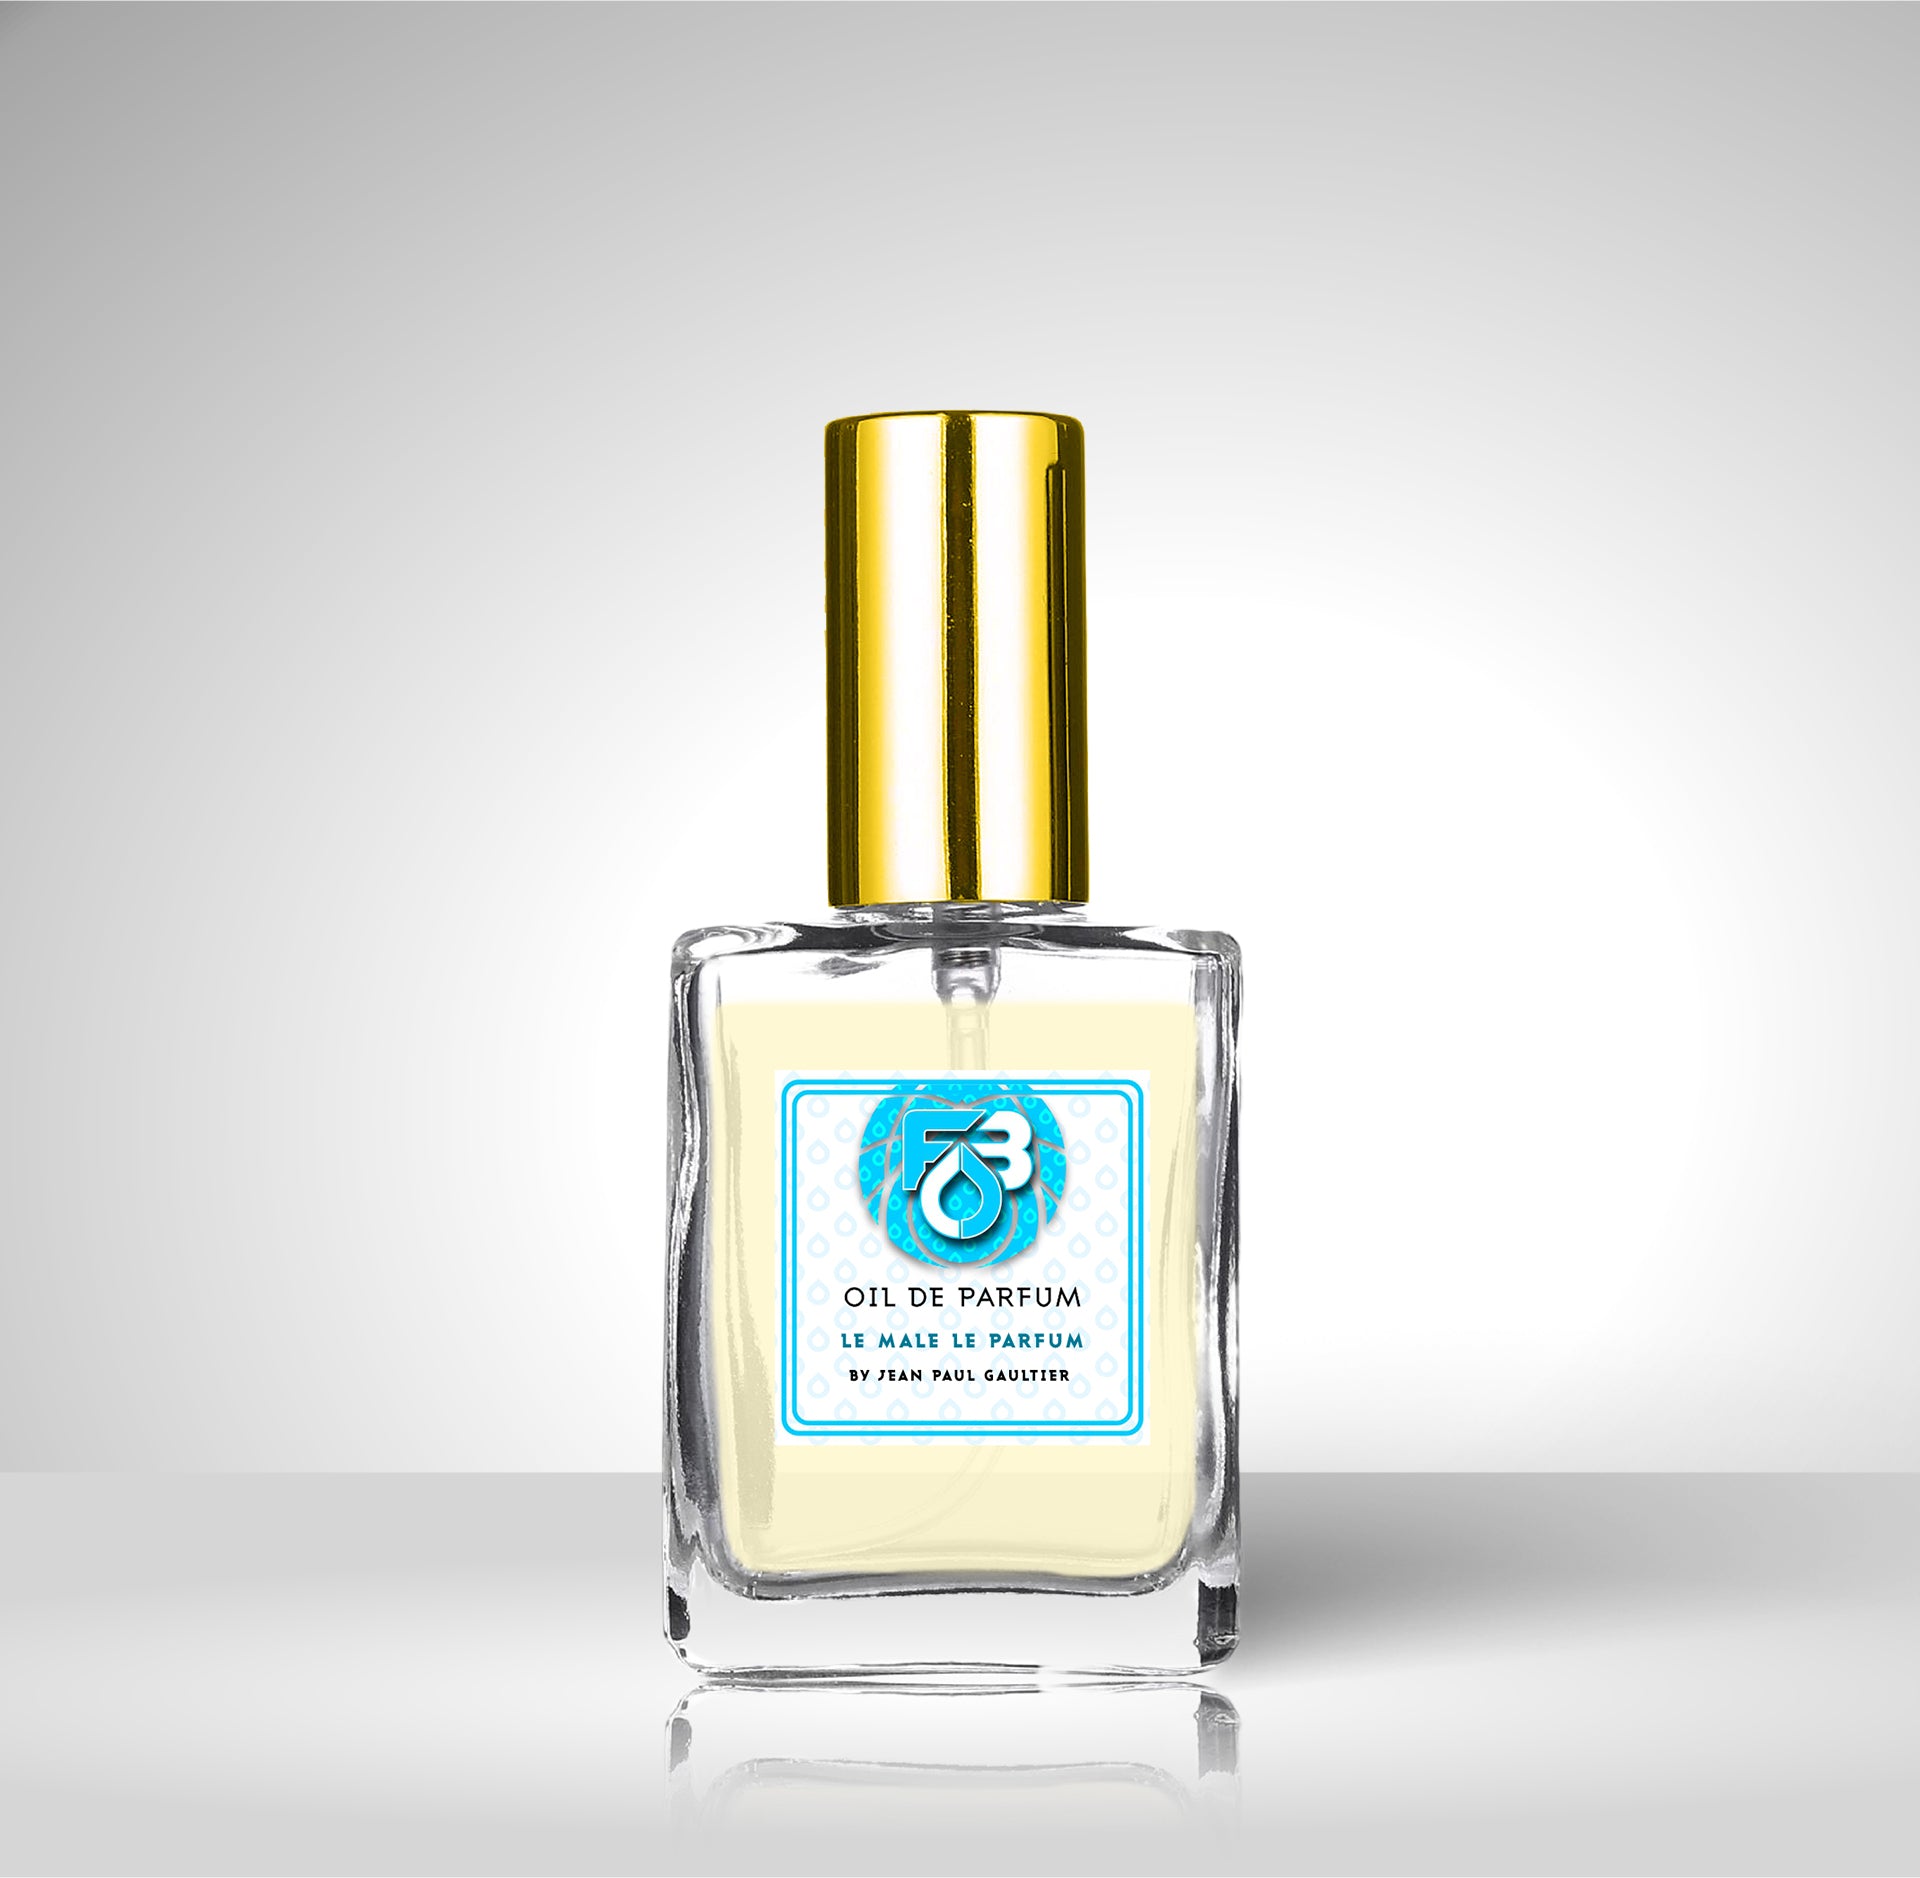 Compare To Le Male Le Parfum®